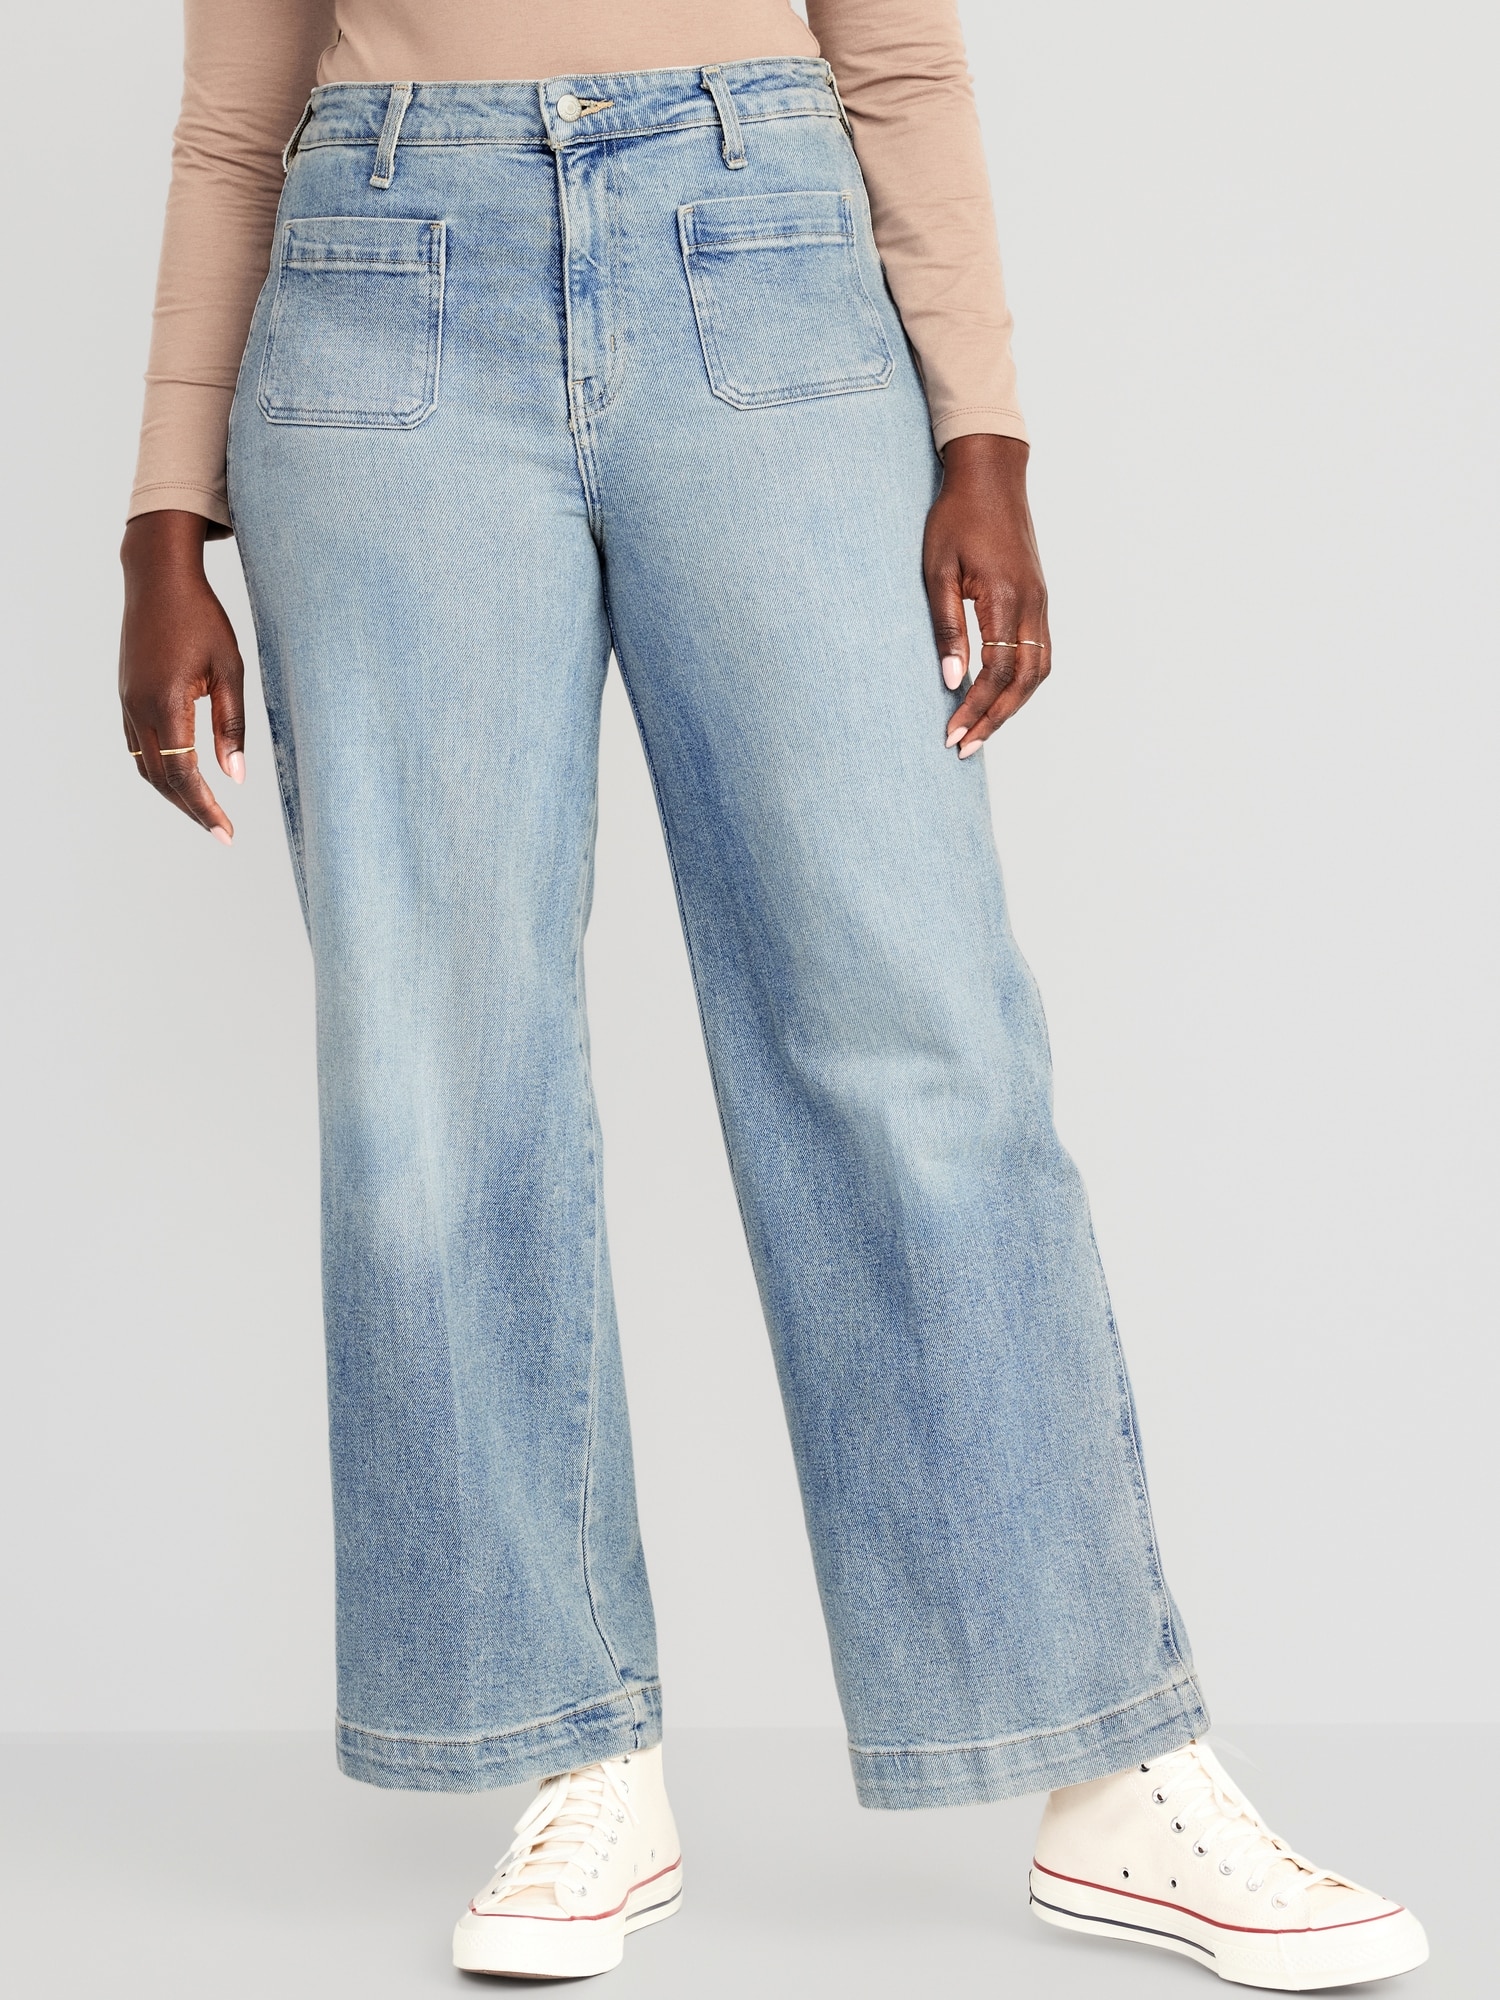 Extra HighWaisted WideLeg Jeans for Women  Old Navy